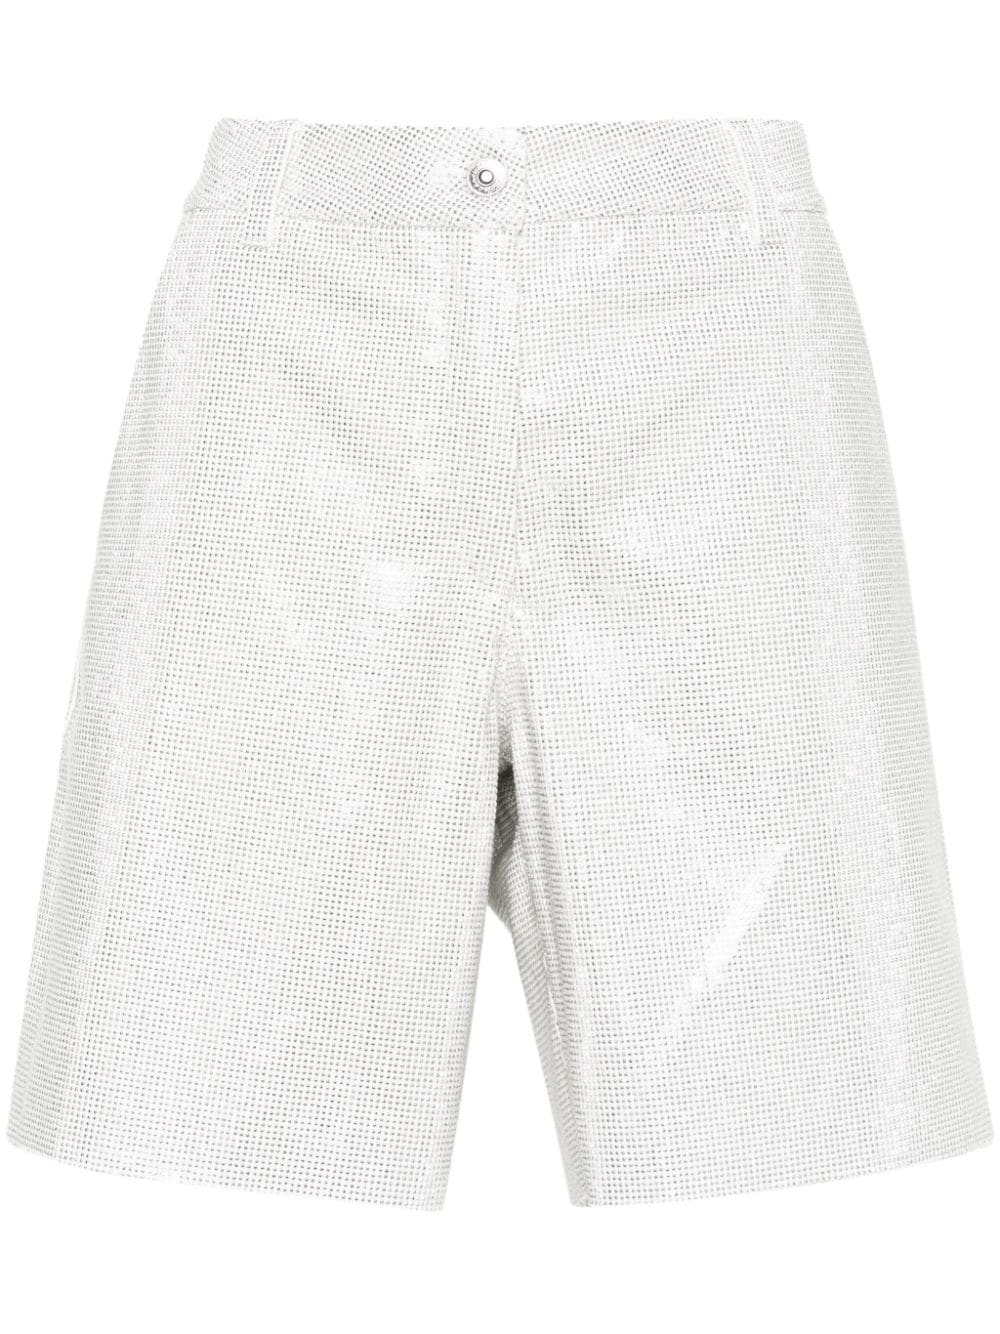 Shop Ermanno Scervino White Crystal Embellished Cotton Shorts For Women